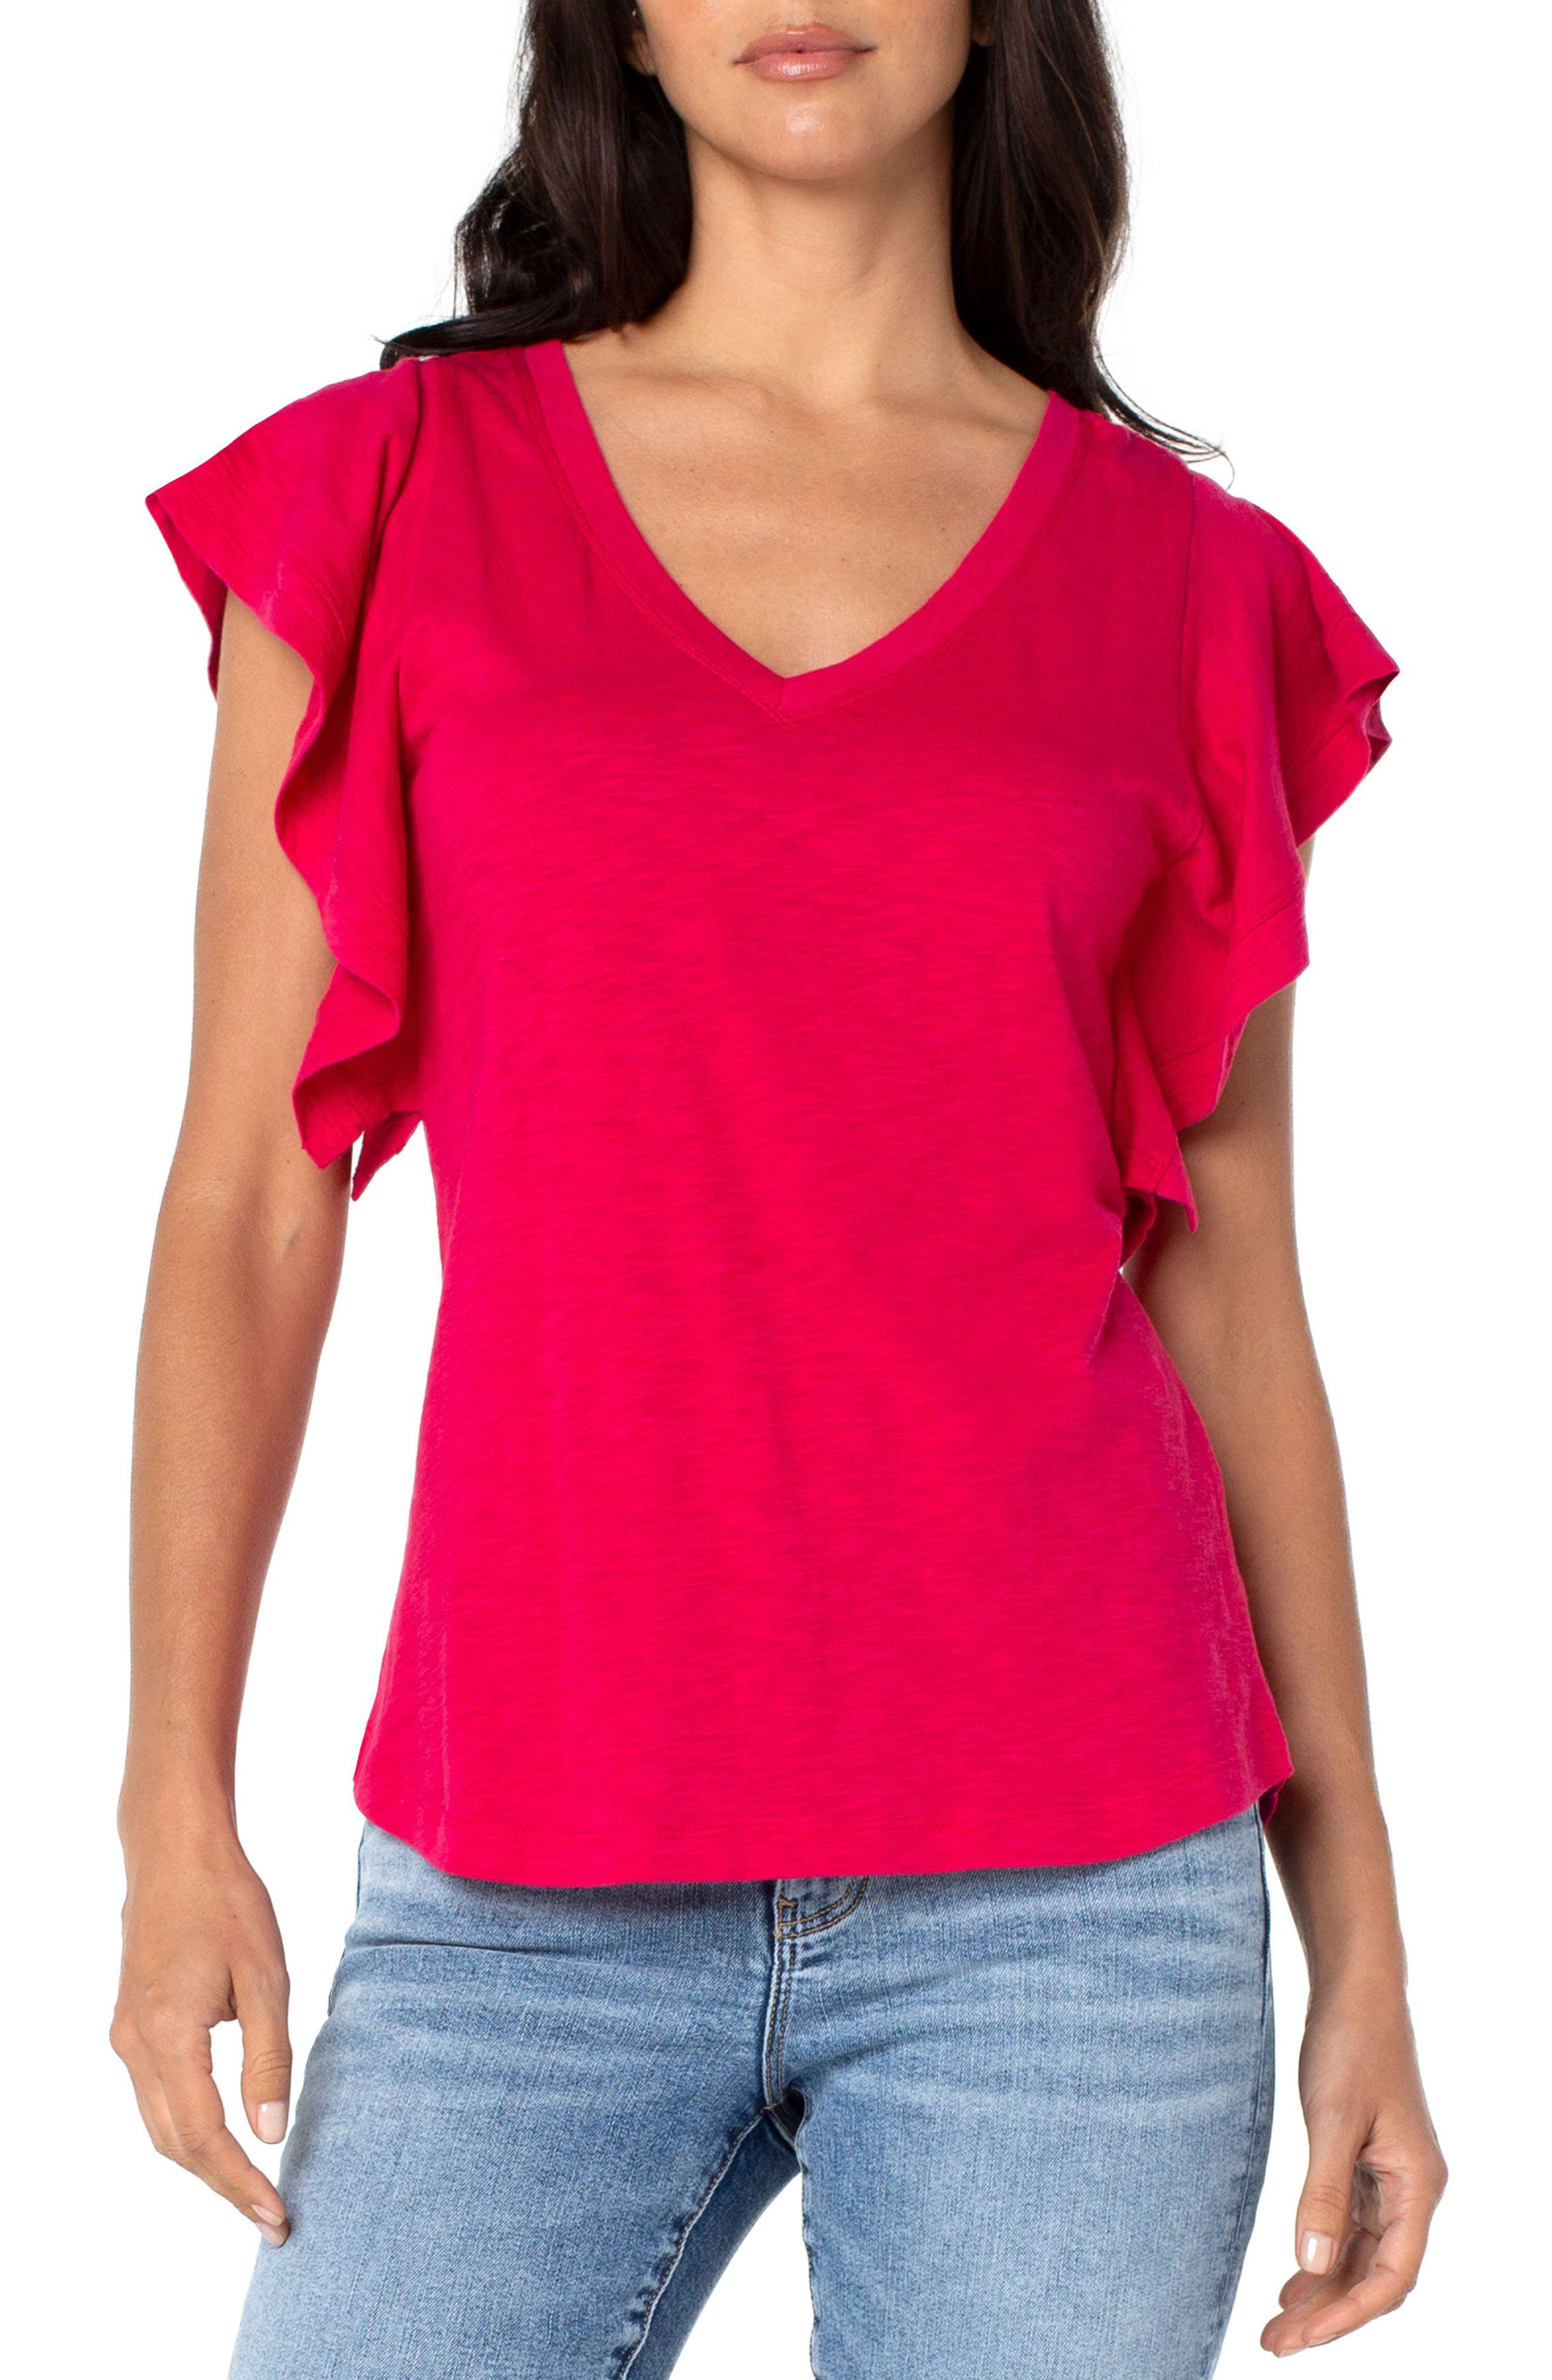 Ruby Ribbon Womens SIZE LARGE Lightweight Pink Flutter Sleeve V-Neck Top Shirt